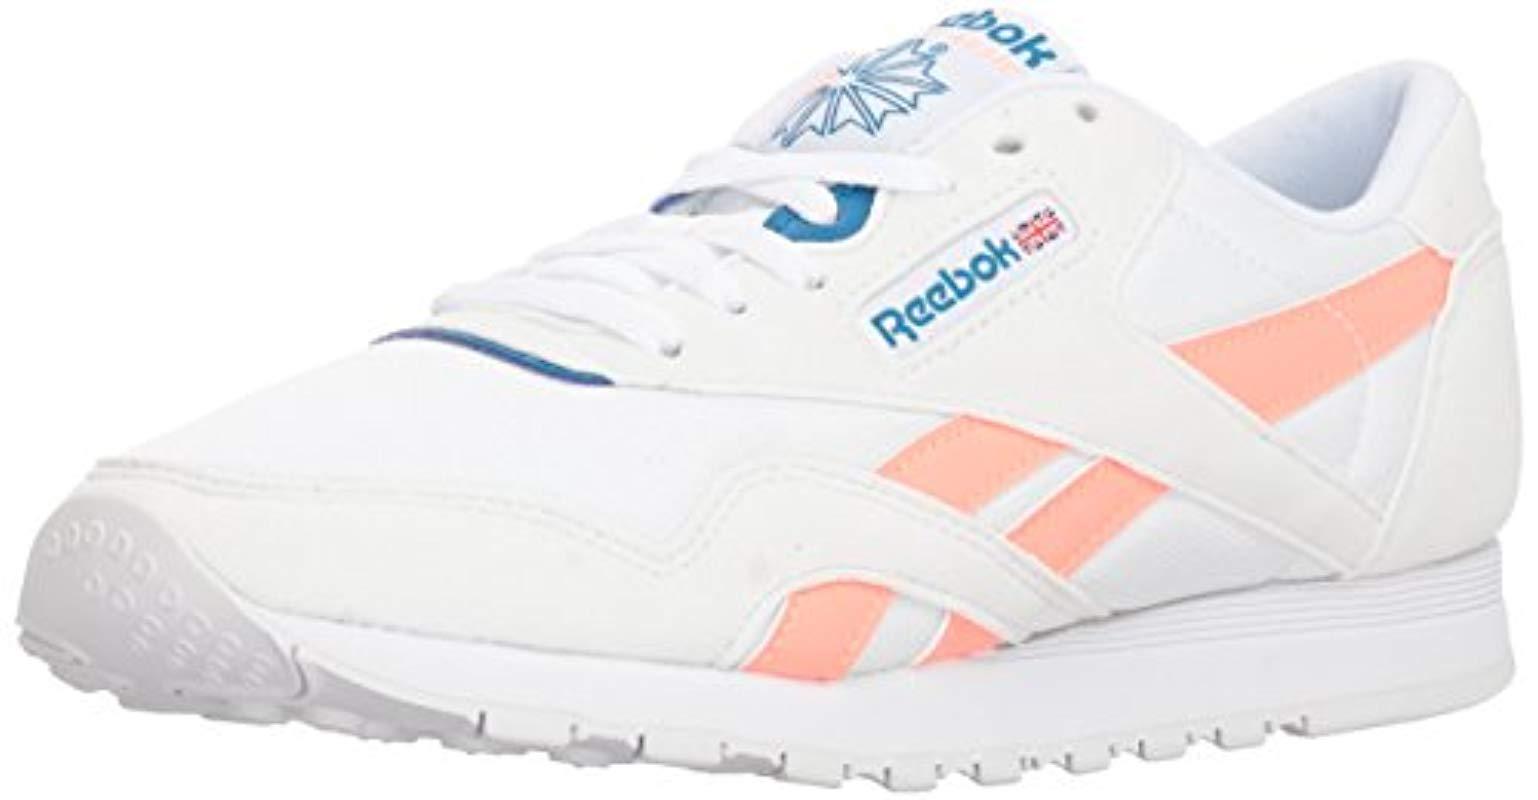 reebok white and pink classics nylon m txt trainers